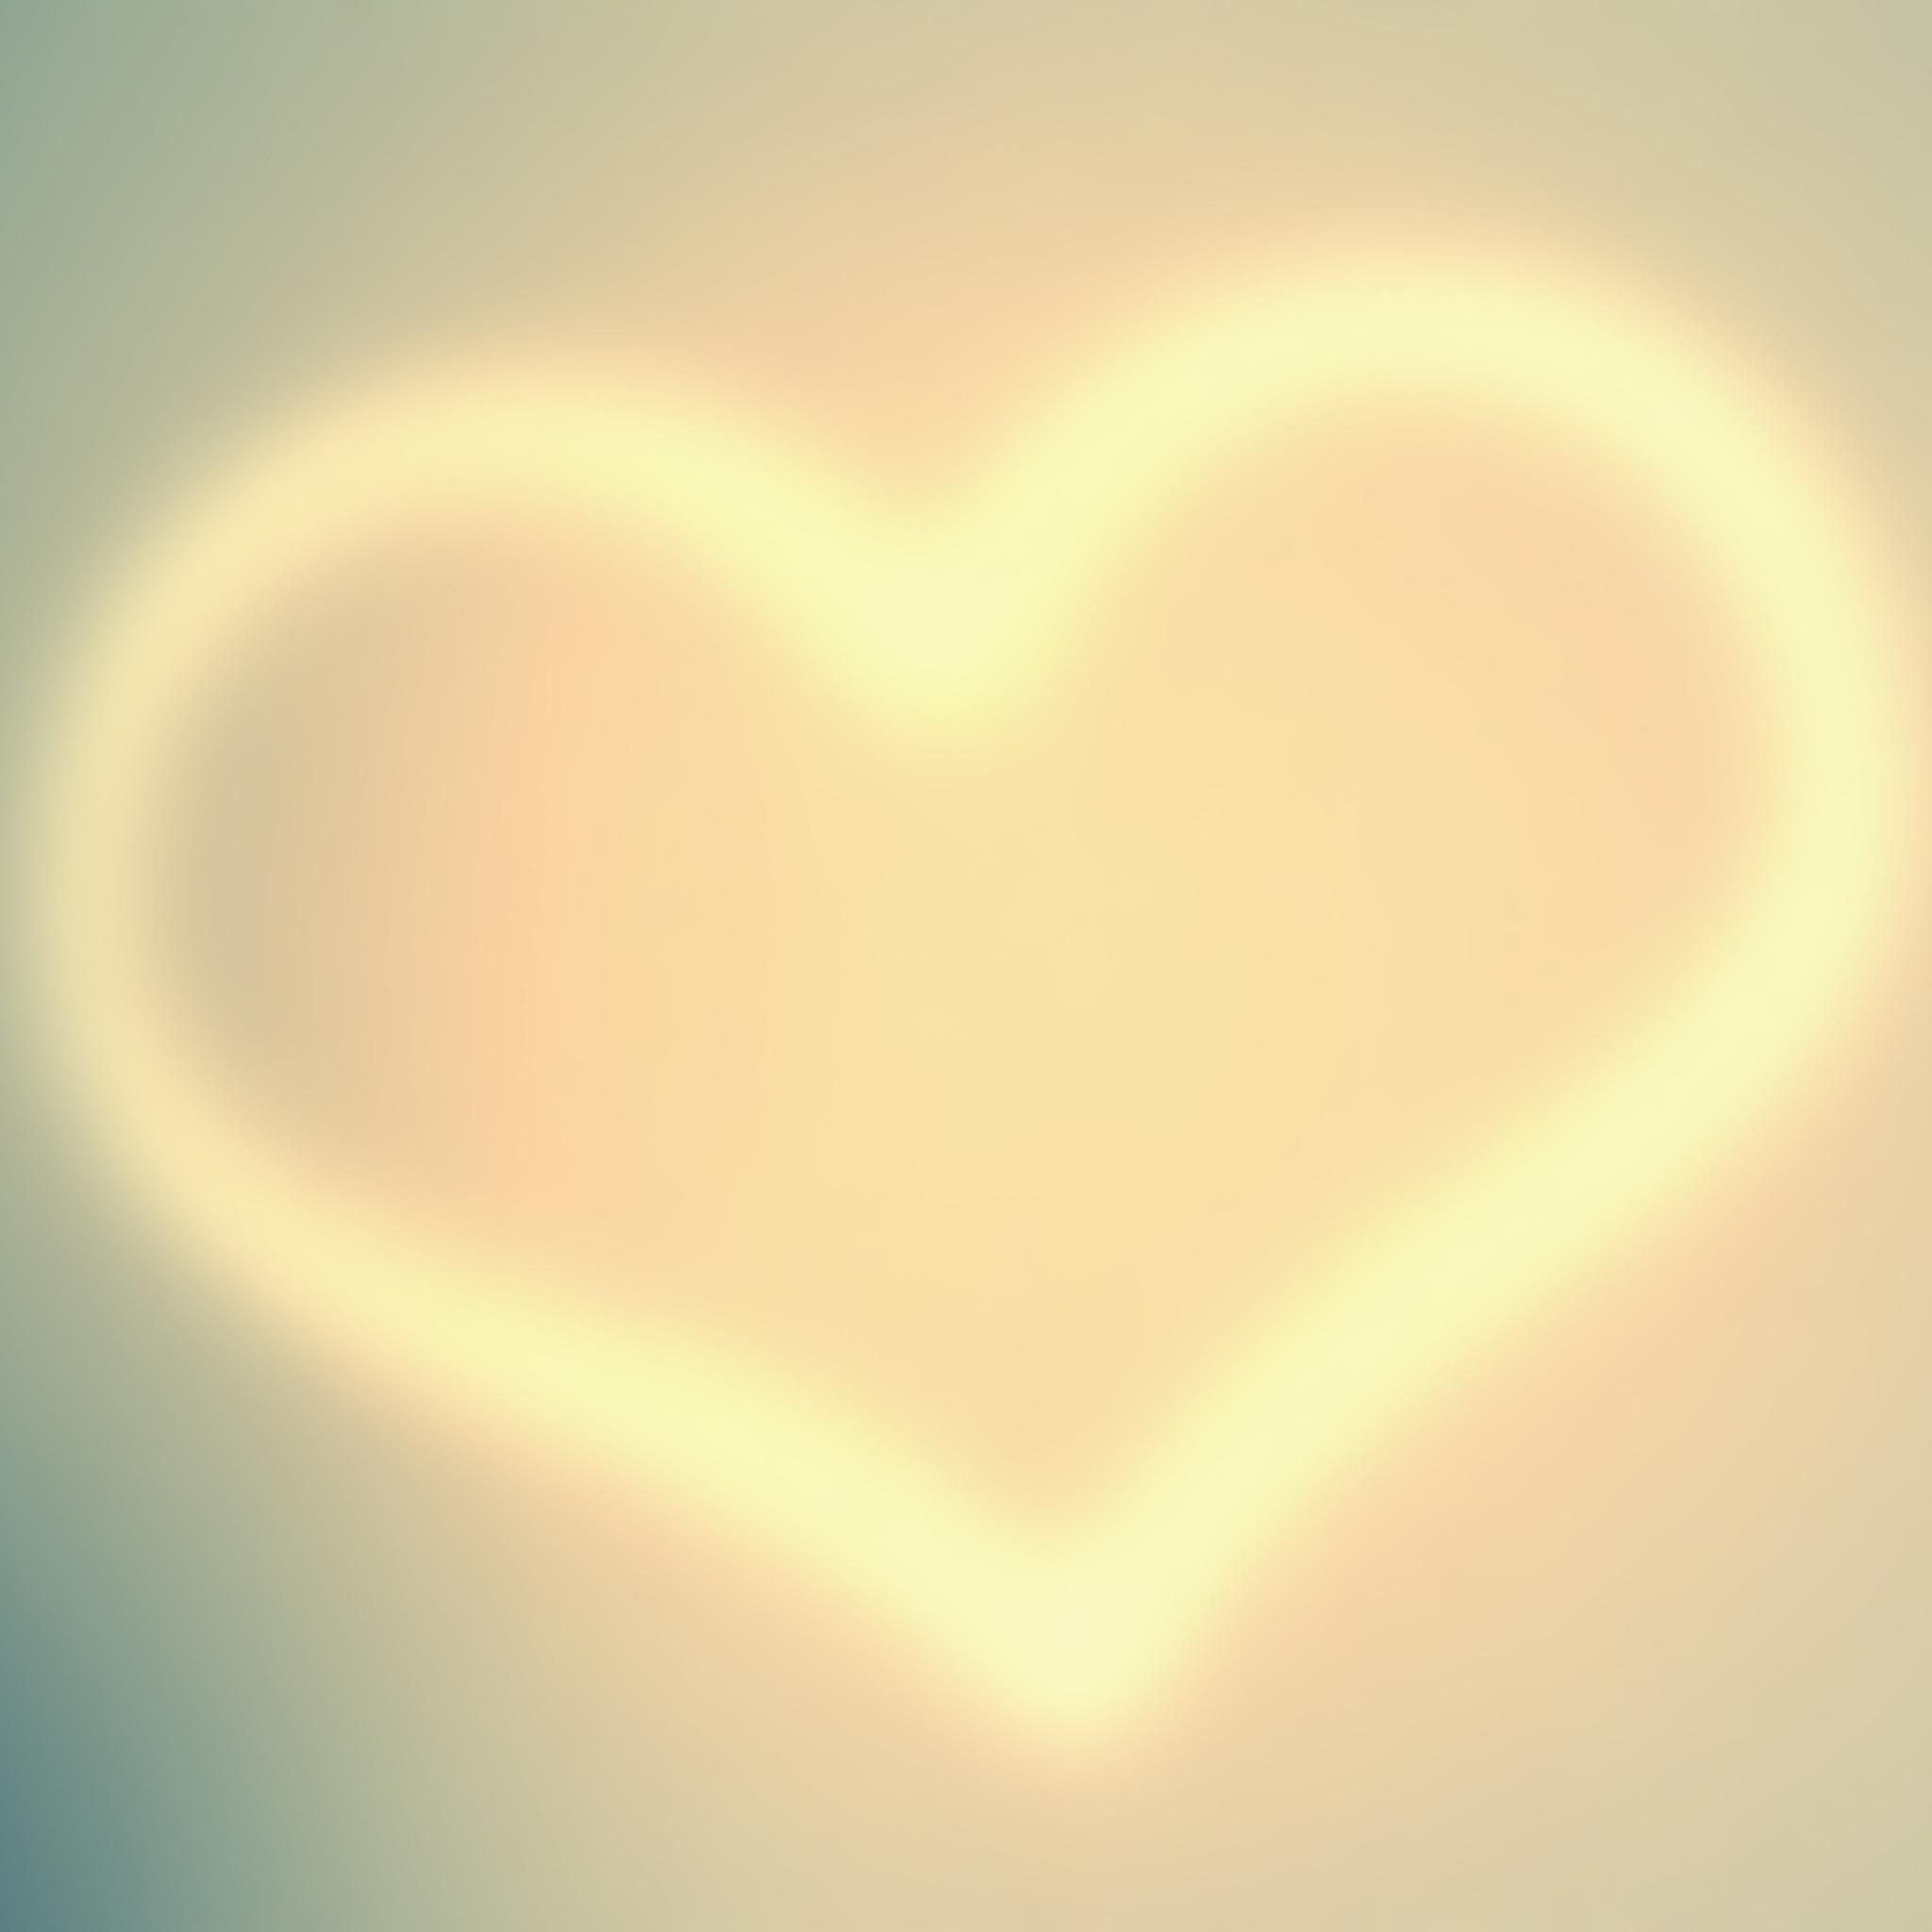 Heart Love iPad Air Wallpaper Free Download